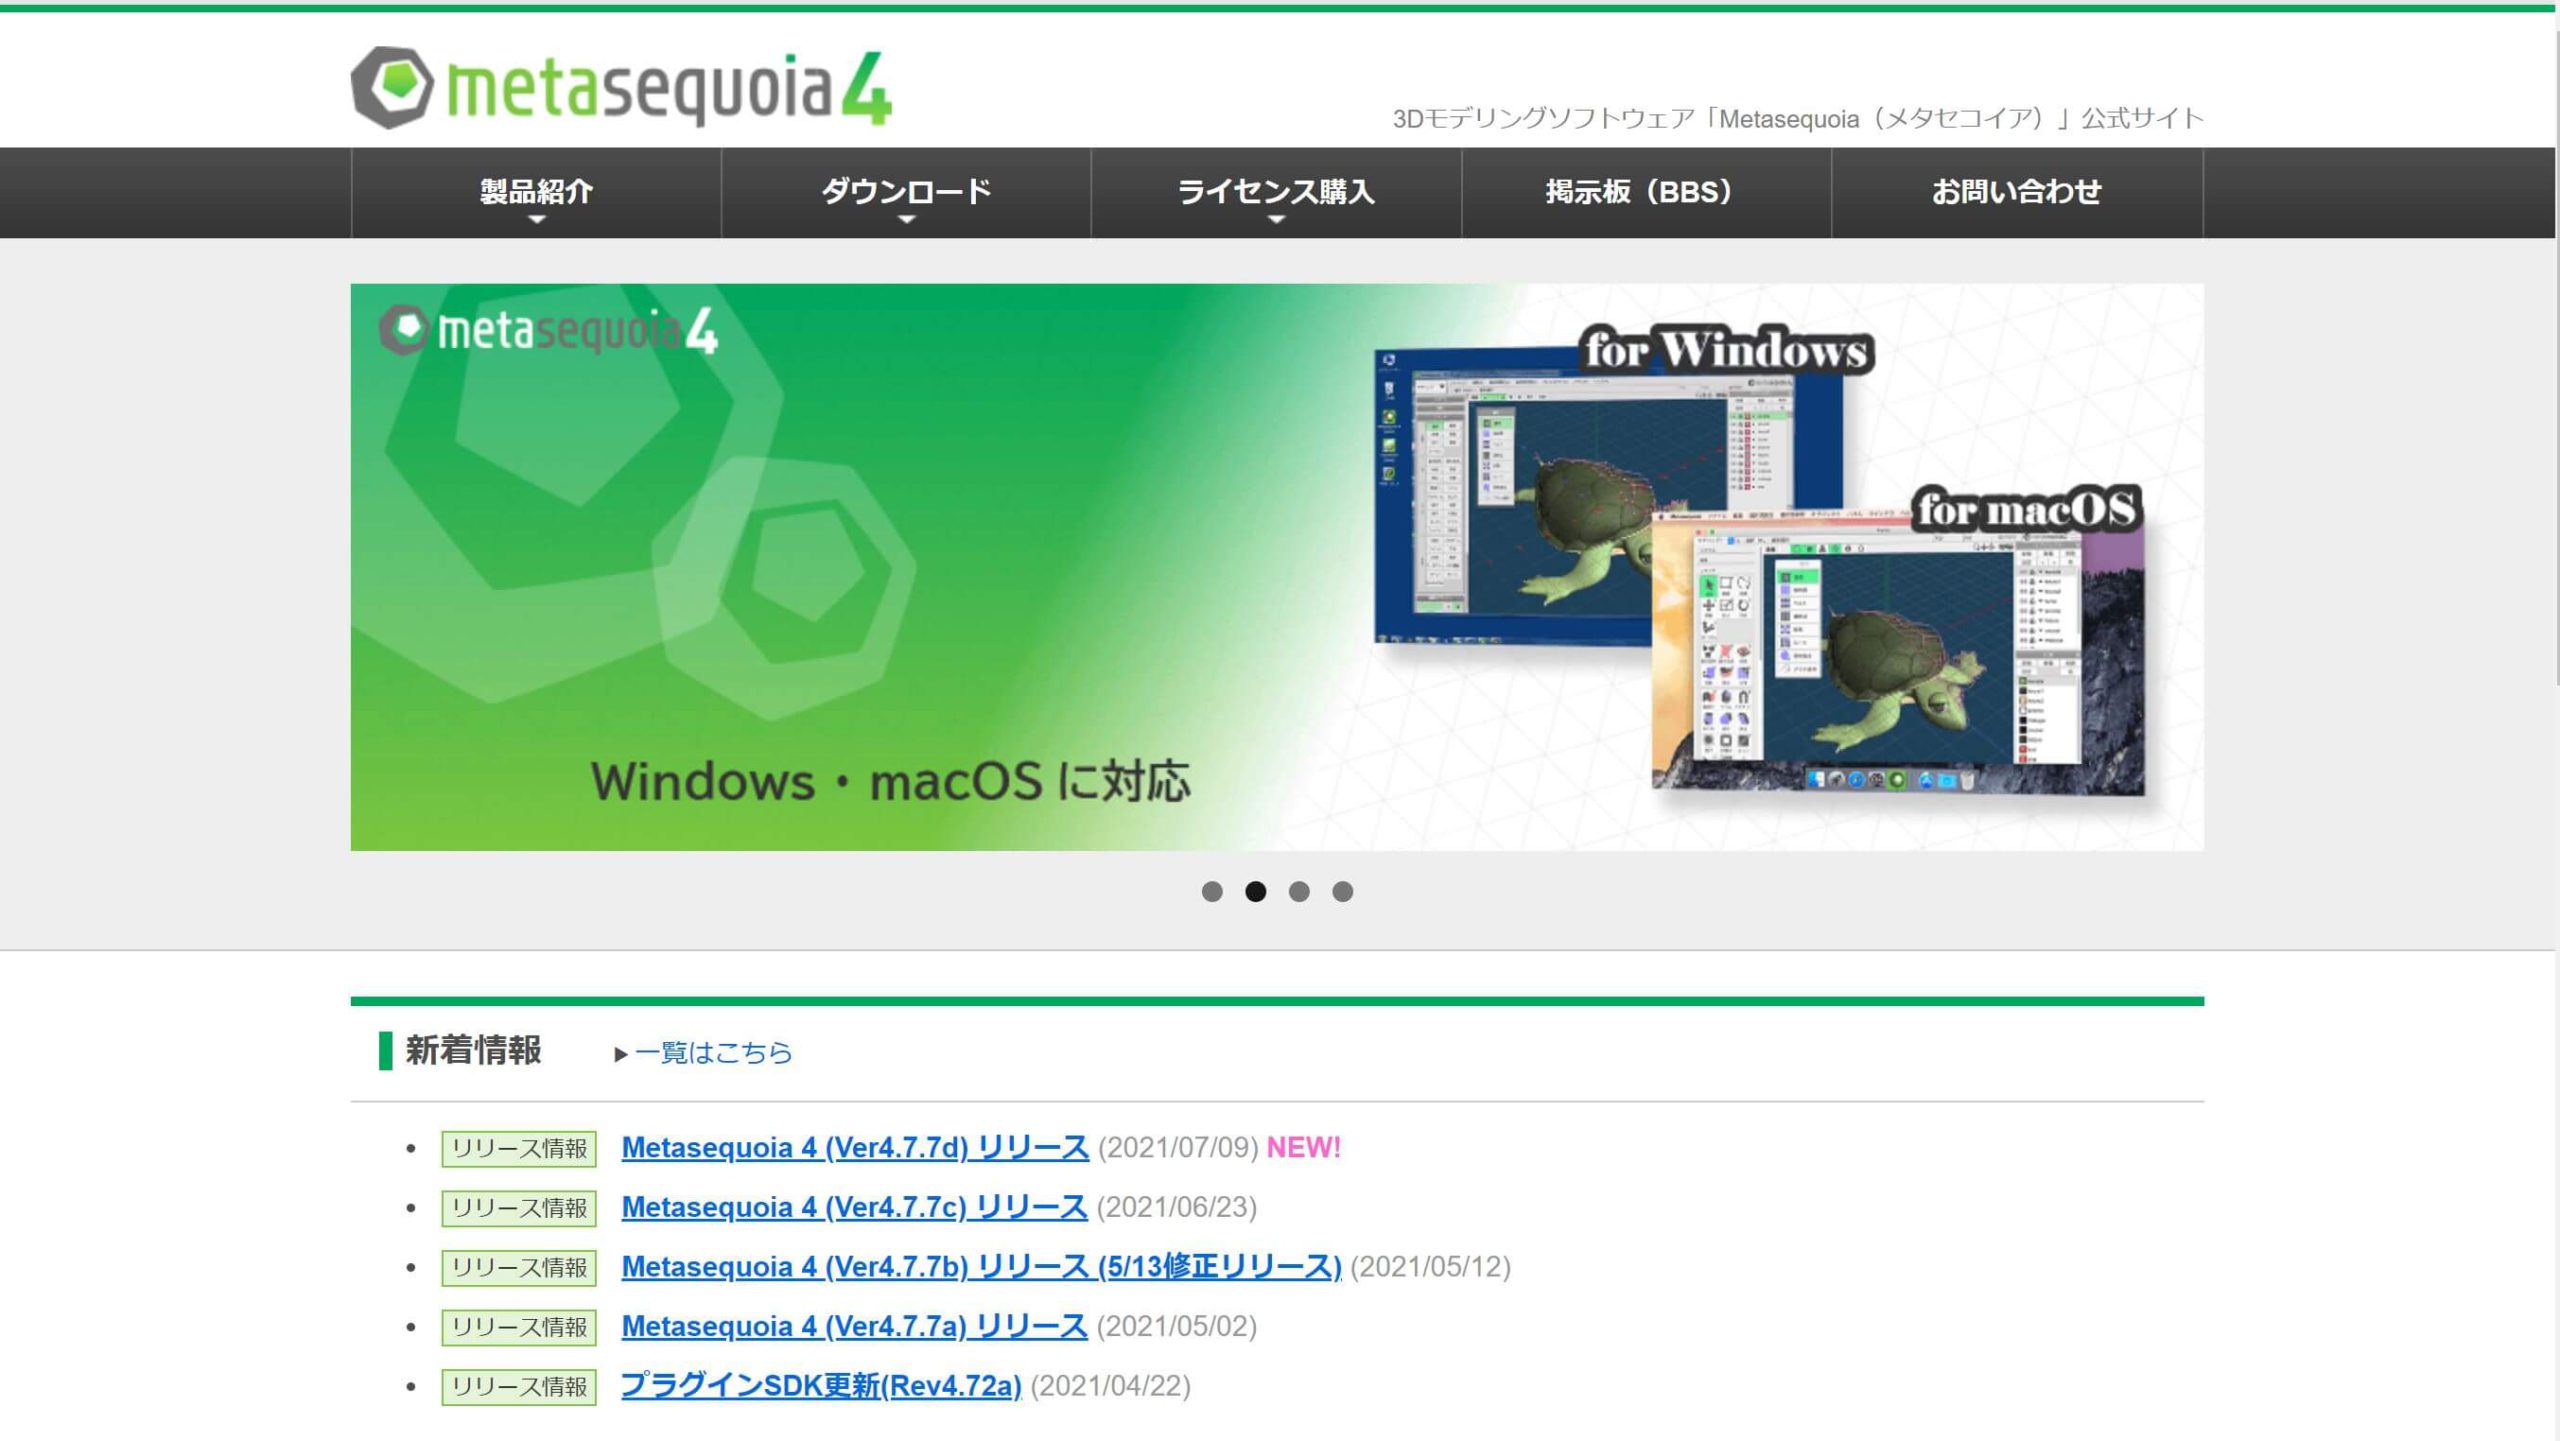 Metasequoia 4.8.6 free instal